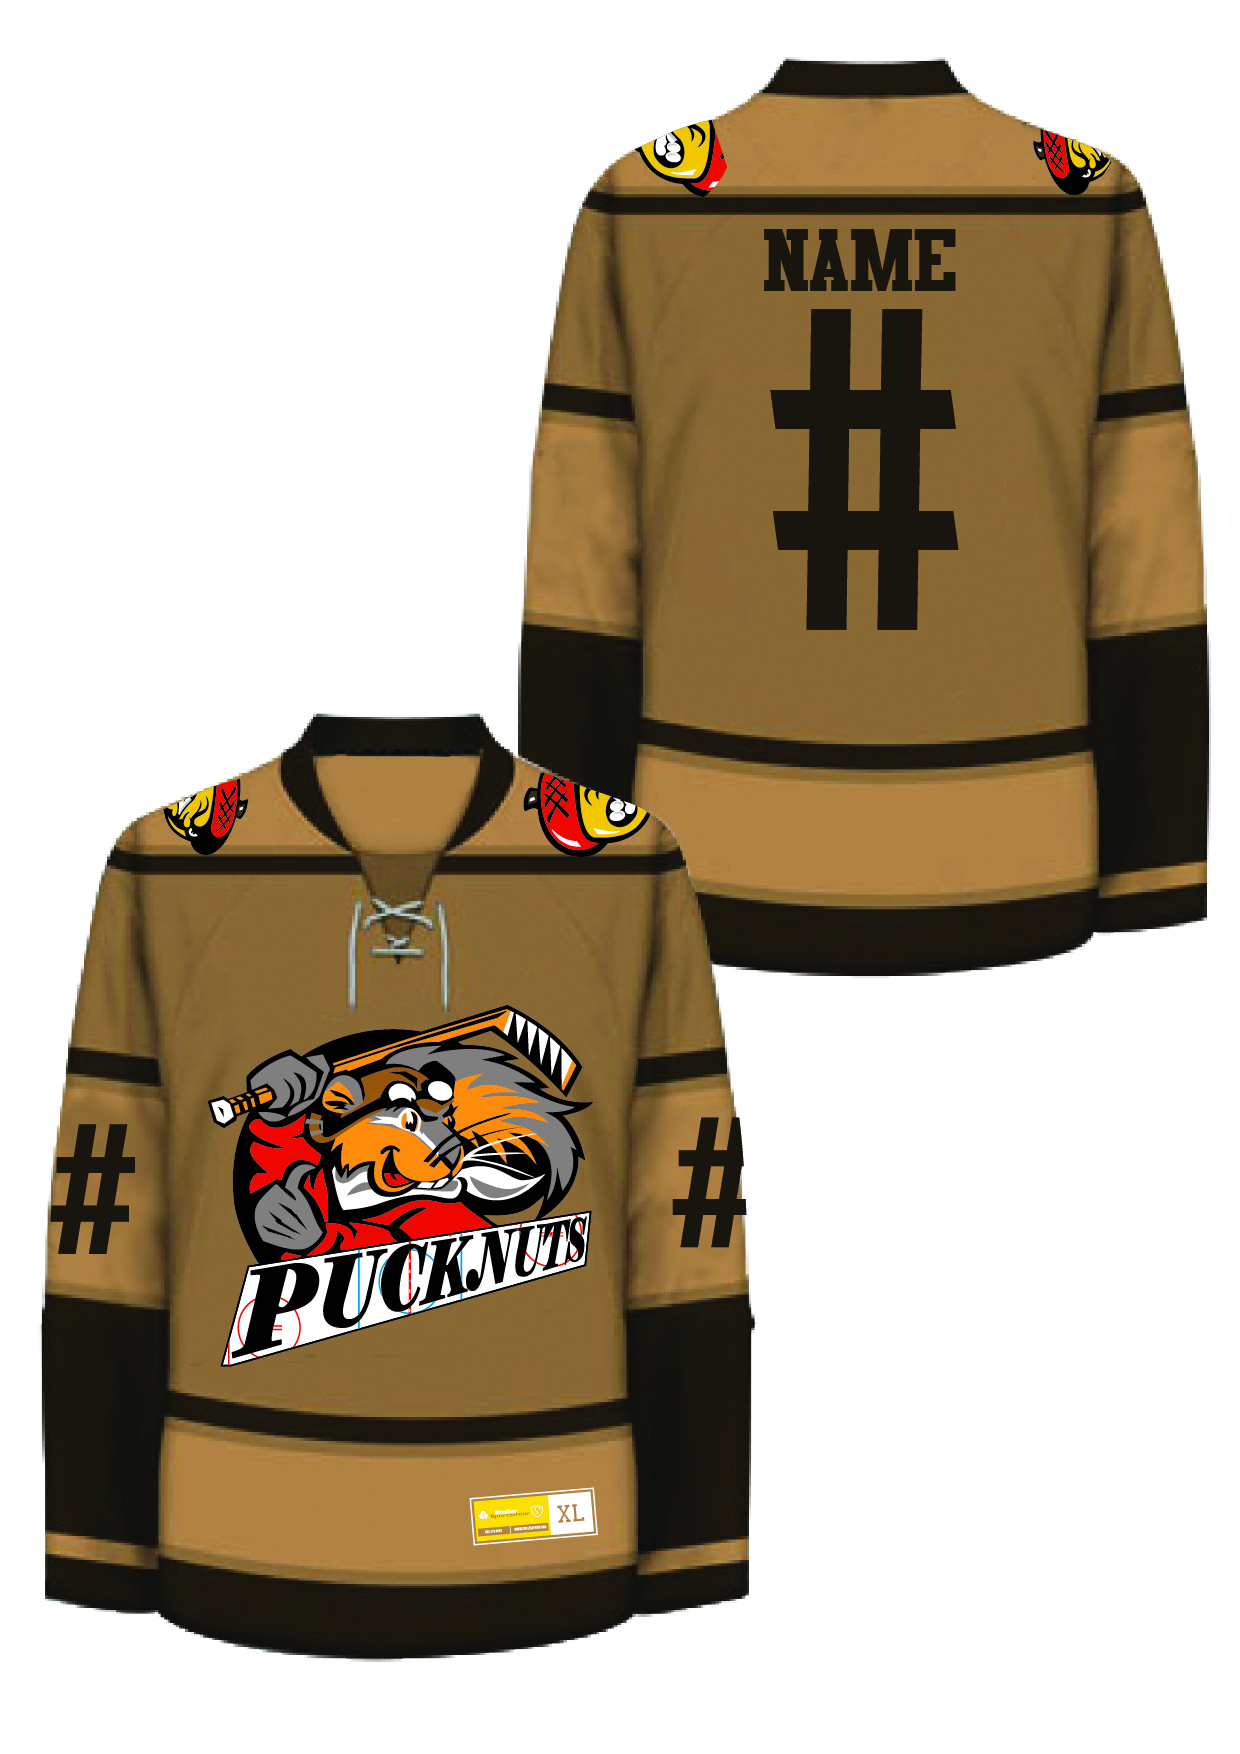 Custom Sublimated Hockey Jersey - Pucknuts 1 